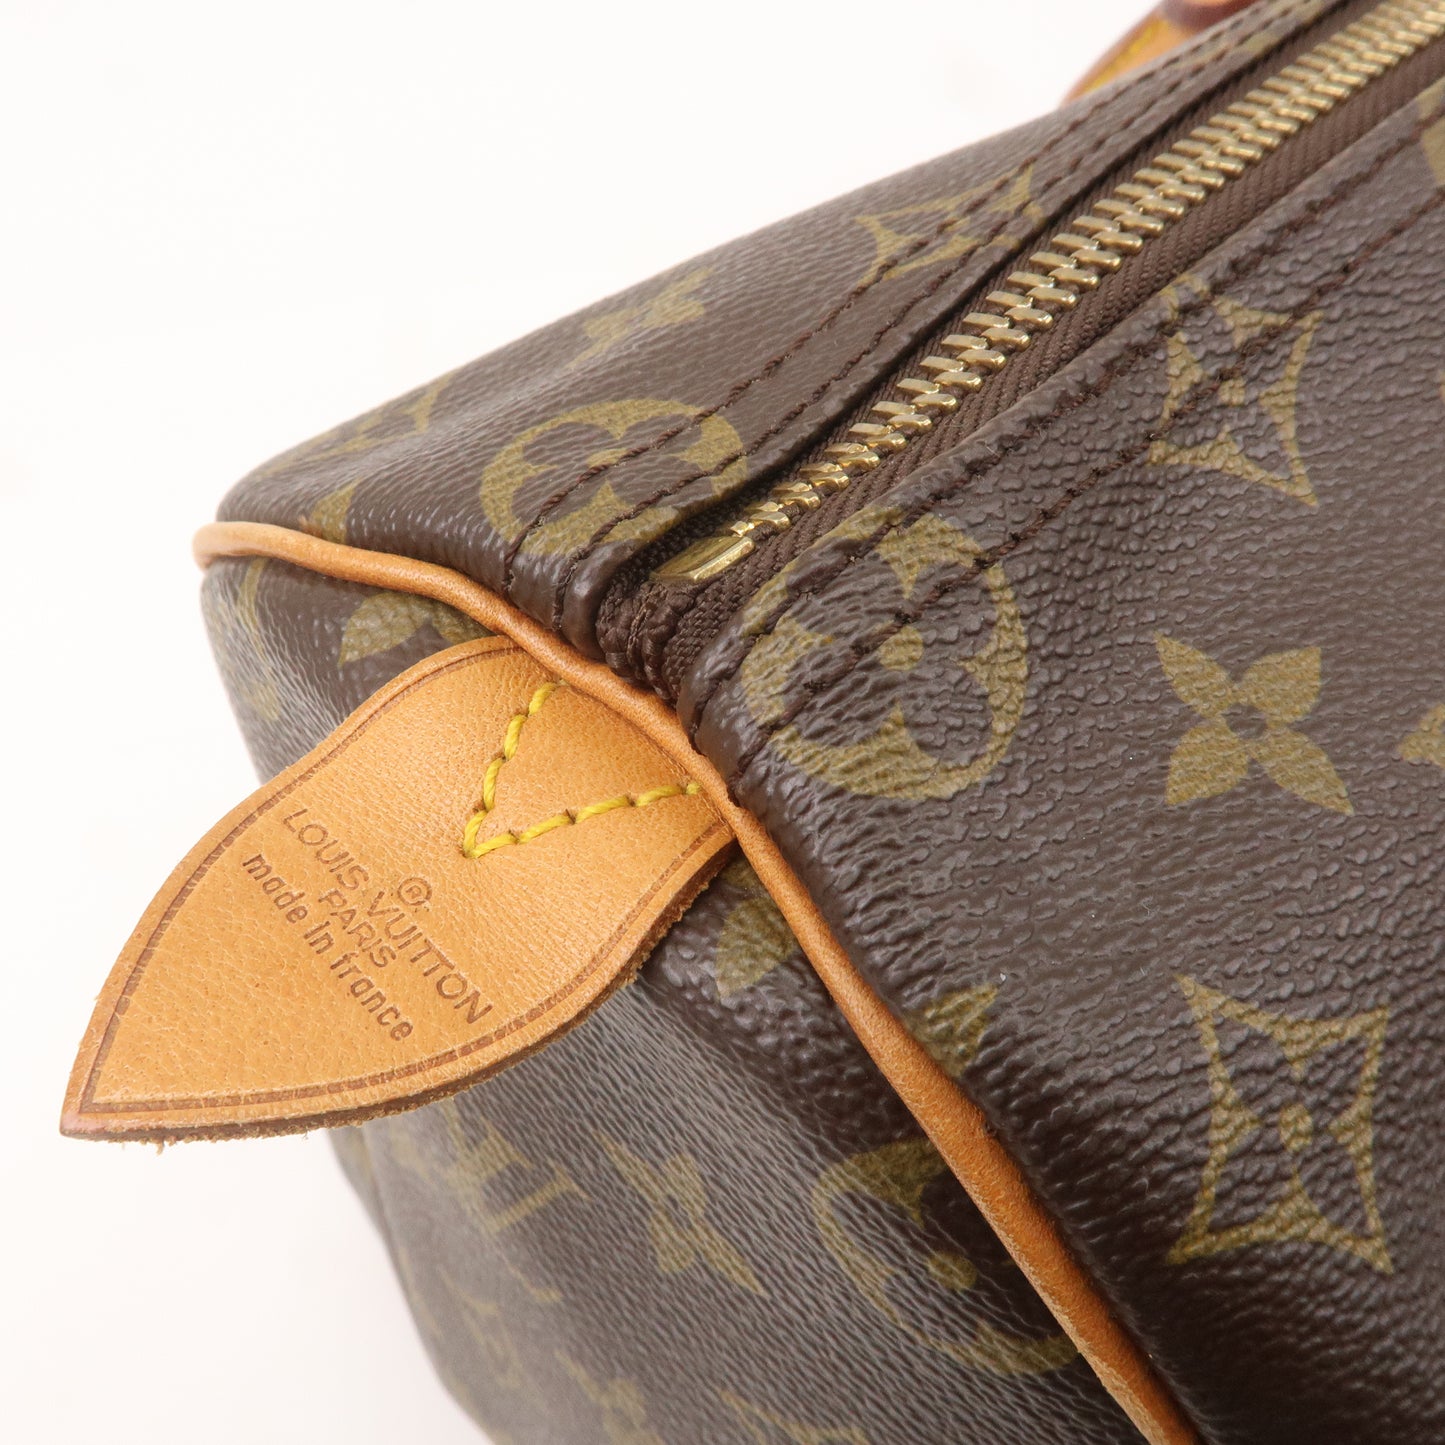 Louis Vuitton Monogram Keep All 50 Boston Bag Brown M41426